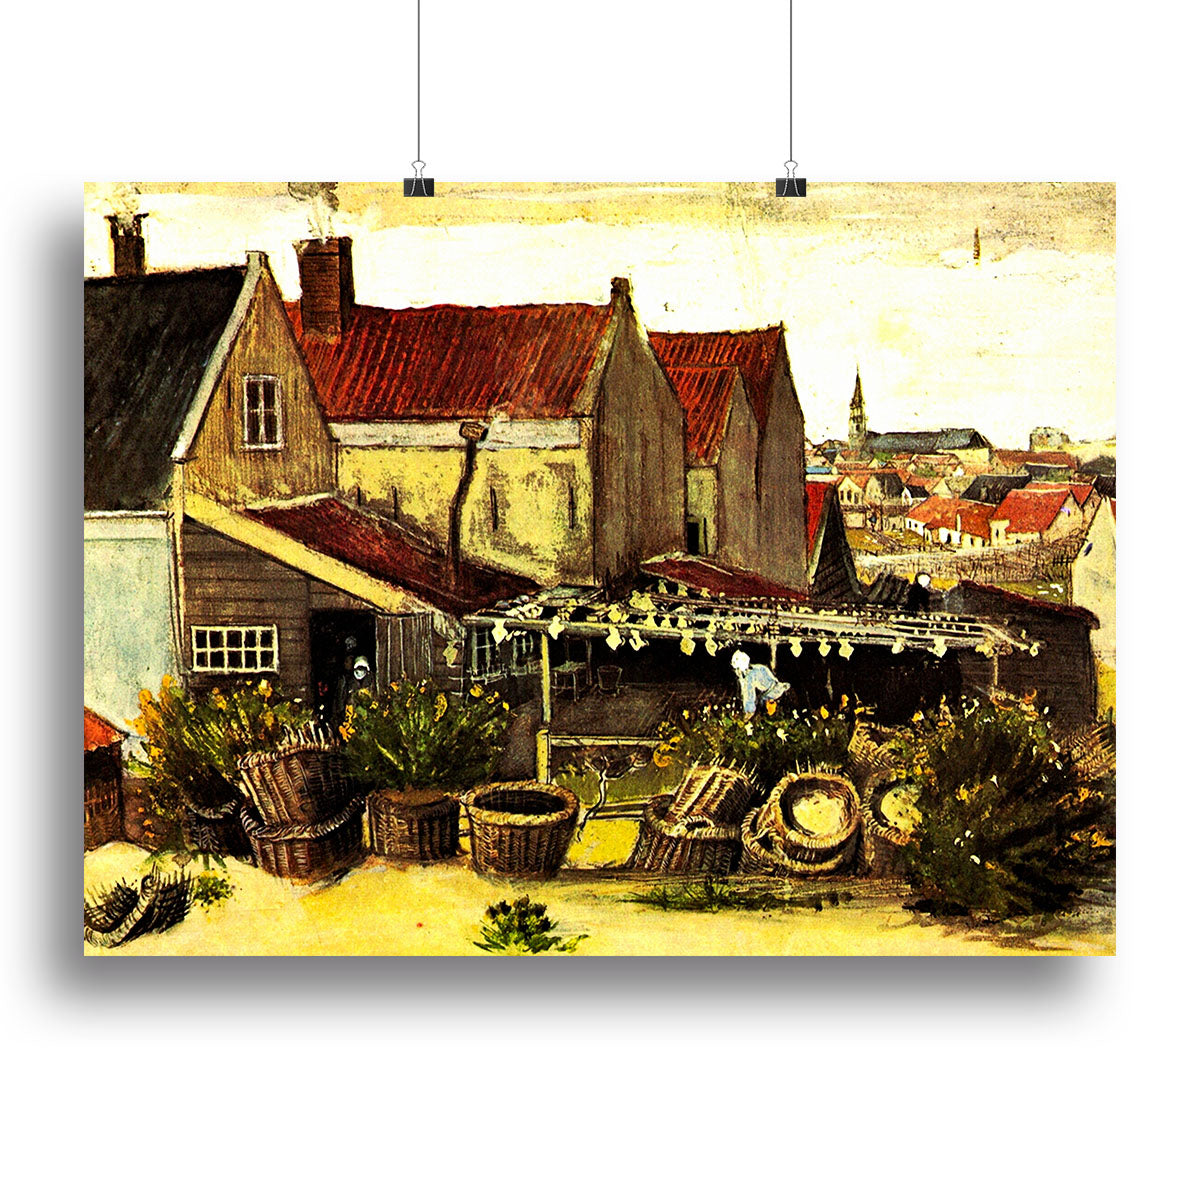 Fish-Drying Barn by Van Gogh Canvas Print or Poster - Canvas Art Rocks - 2